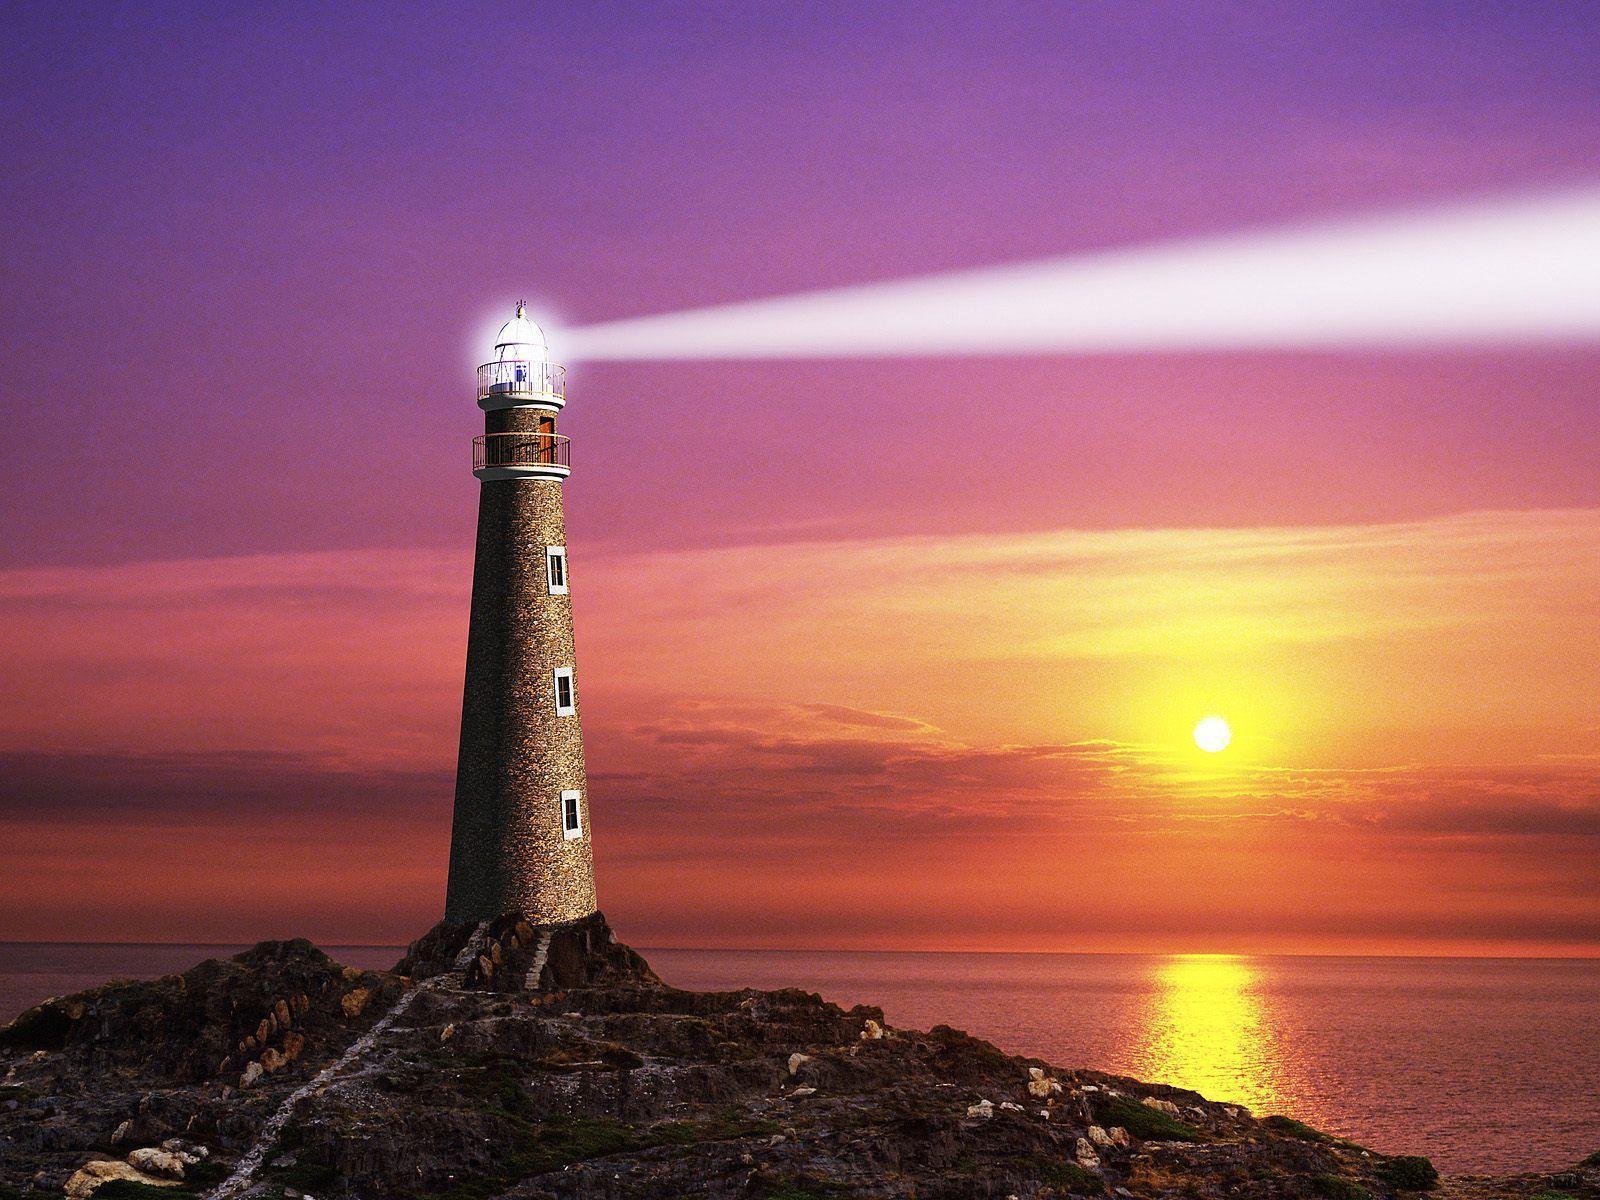 The Coastal Lighthouse Art Photography Desktop Wallpaper